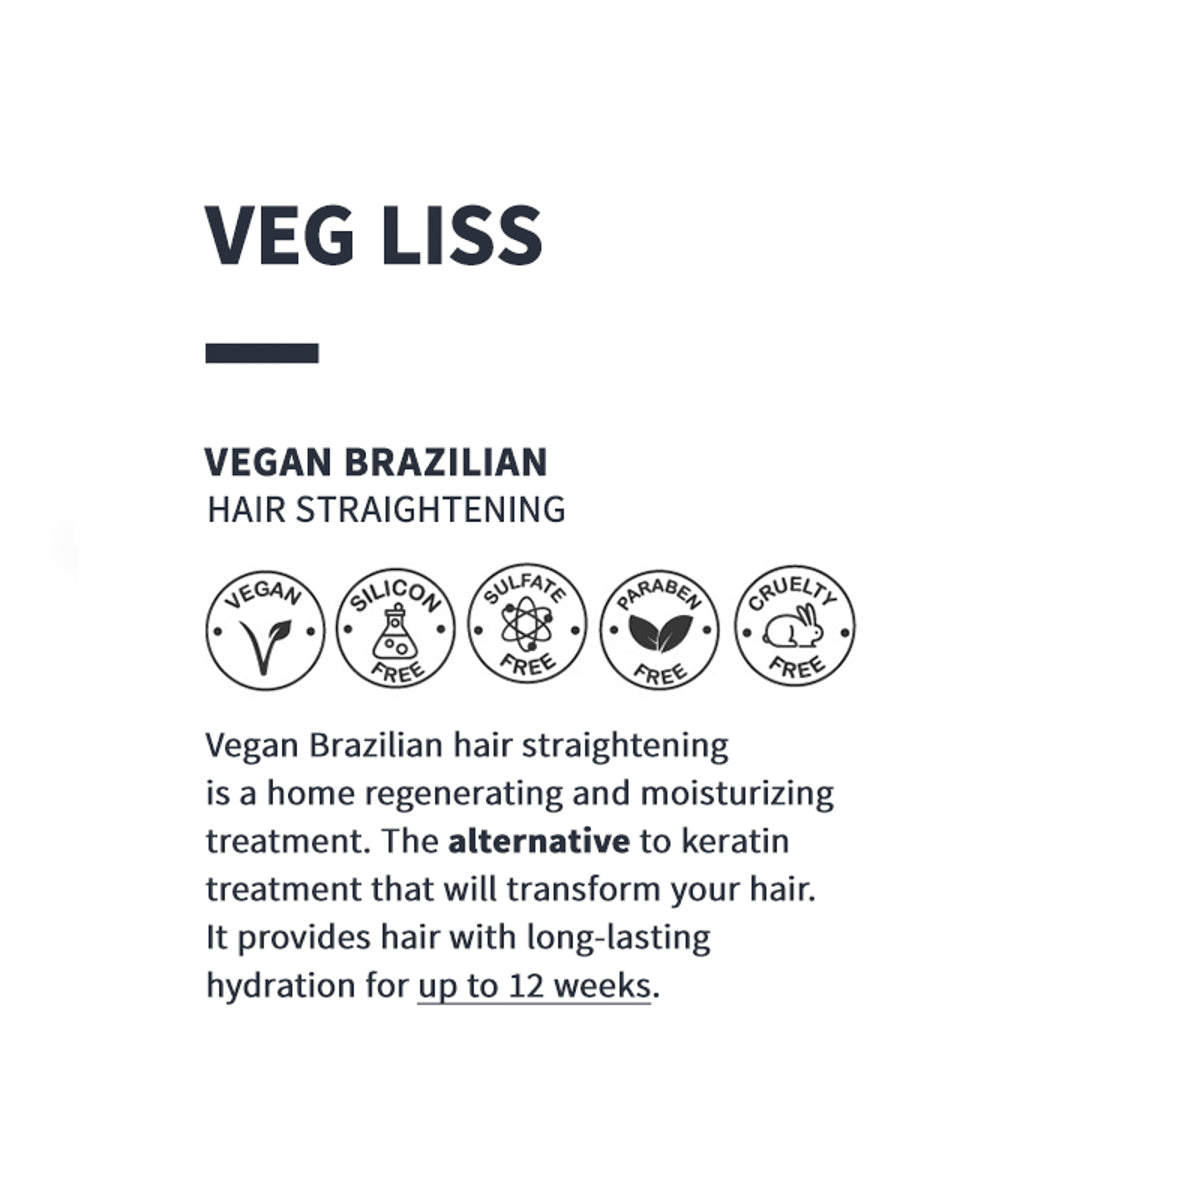 ALTERLOOK PROFESSIONAL VEG LISS Vegan Brasilianische Haarglättung 120ml +30ml